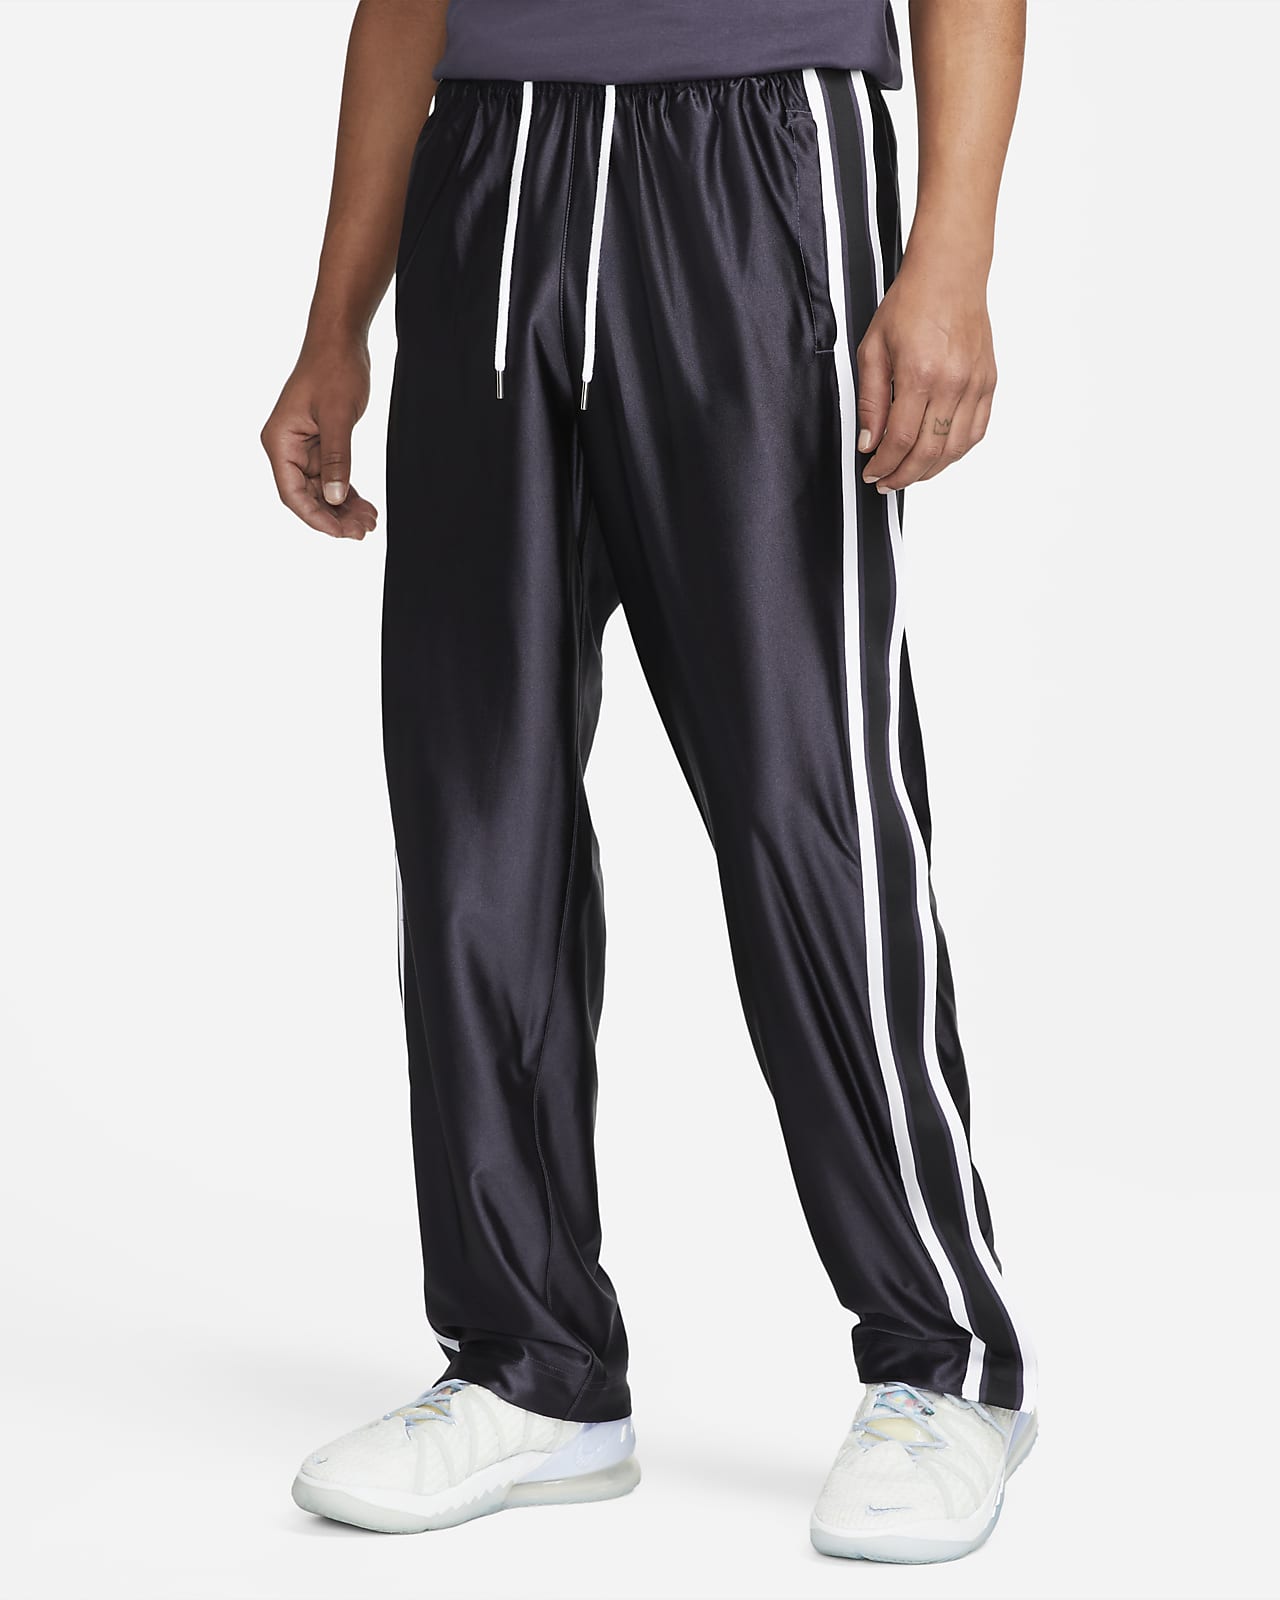 Men Tear Away Pants Side Split Button Basketball Training Jogger Pants  Dailywear | eBay